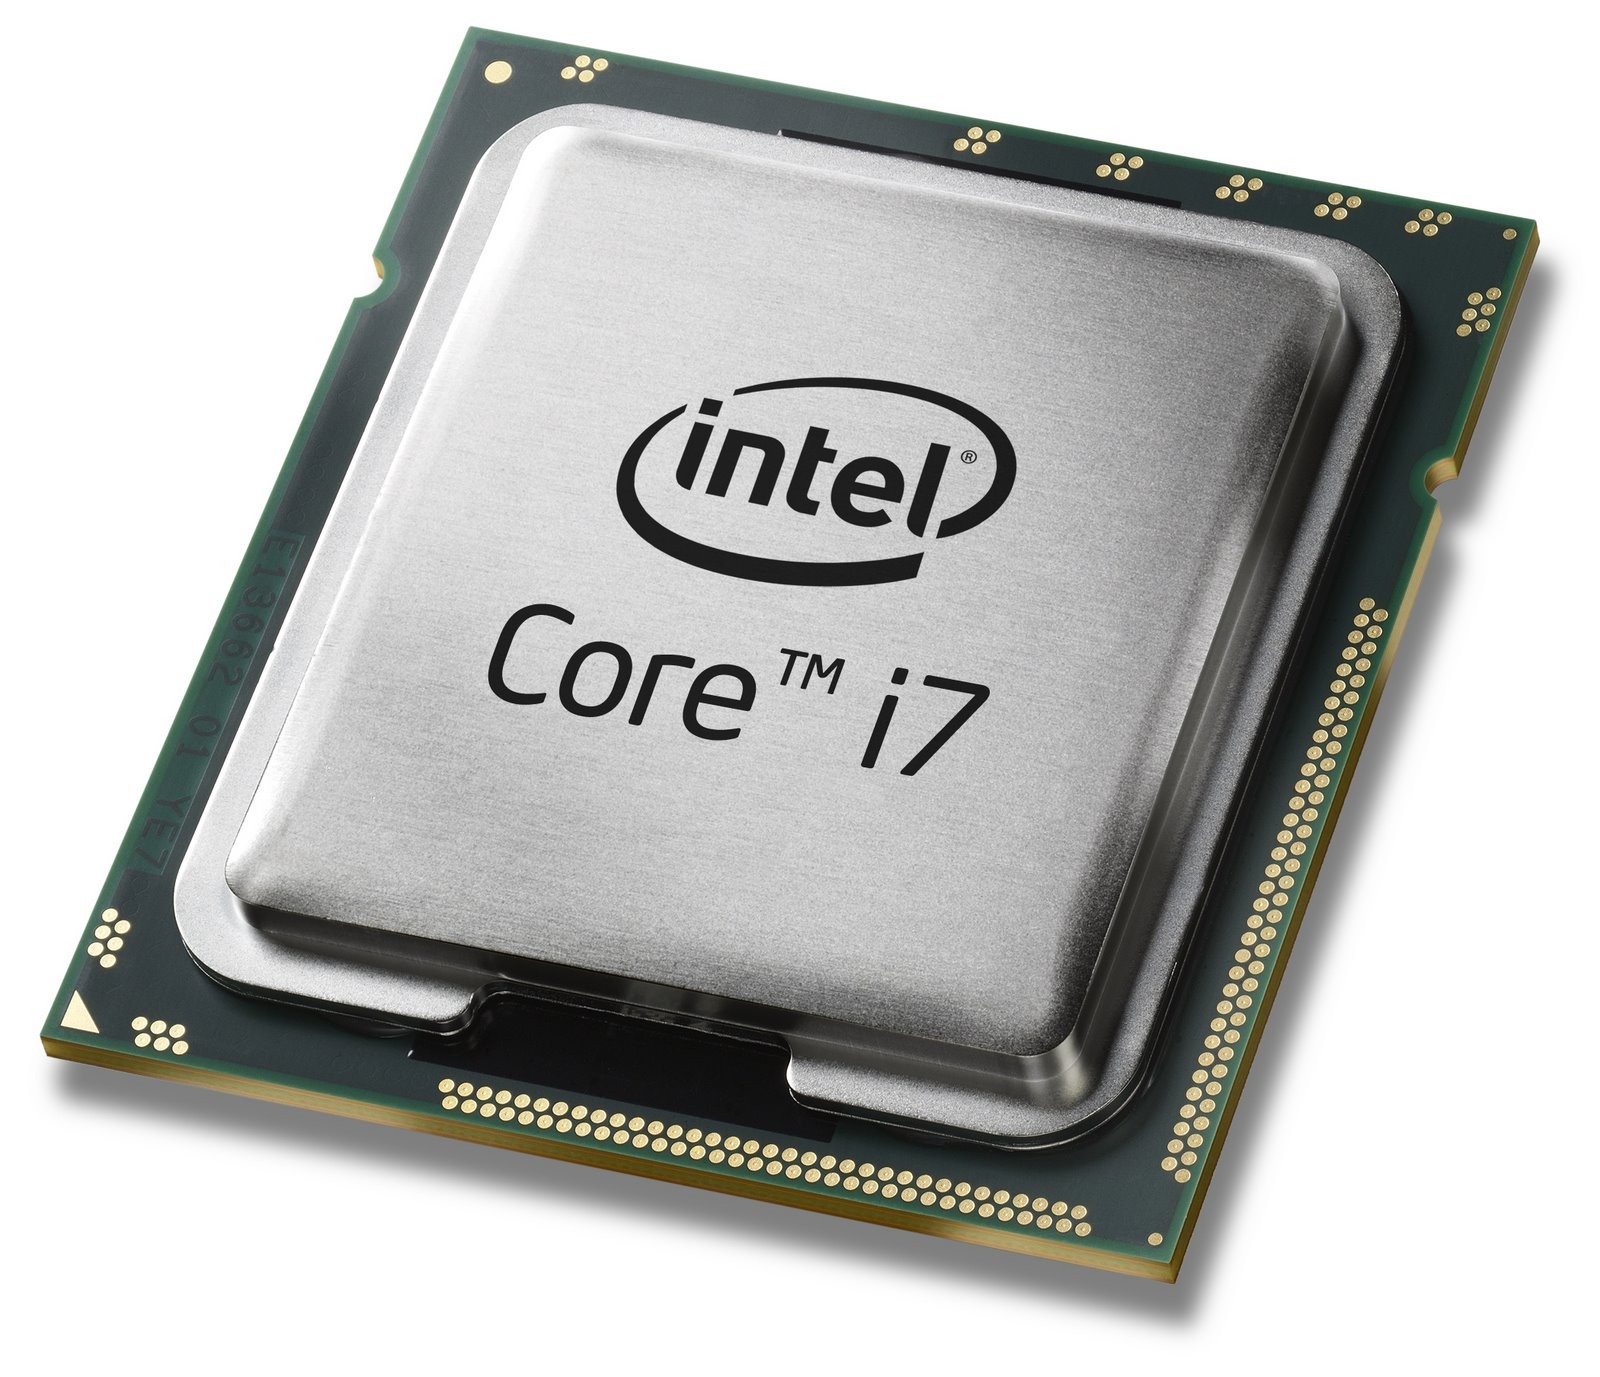 500030307-Intel Core i7-3667U SR0N5 2Ghz 5GT/s BGA 1023 Processor-image